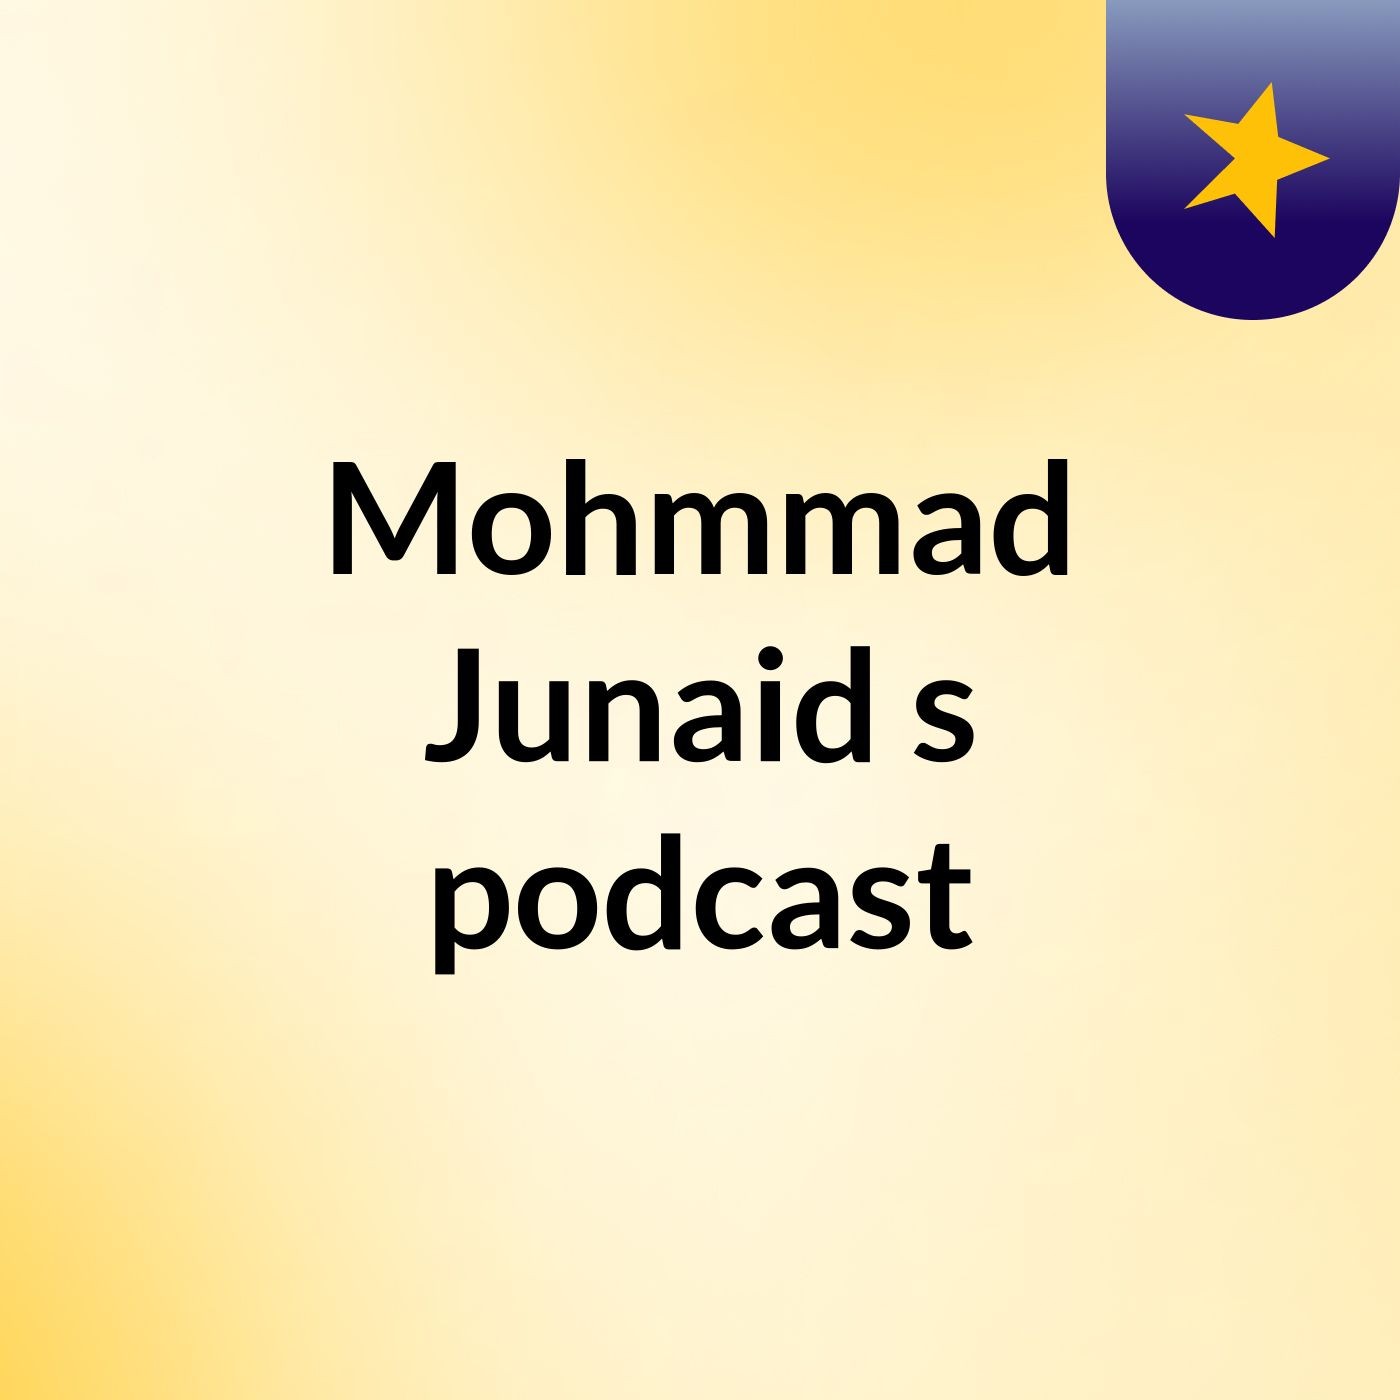 Mohmmad Junaid's podcast